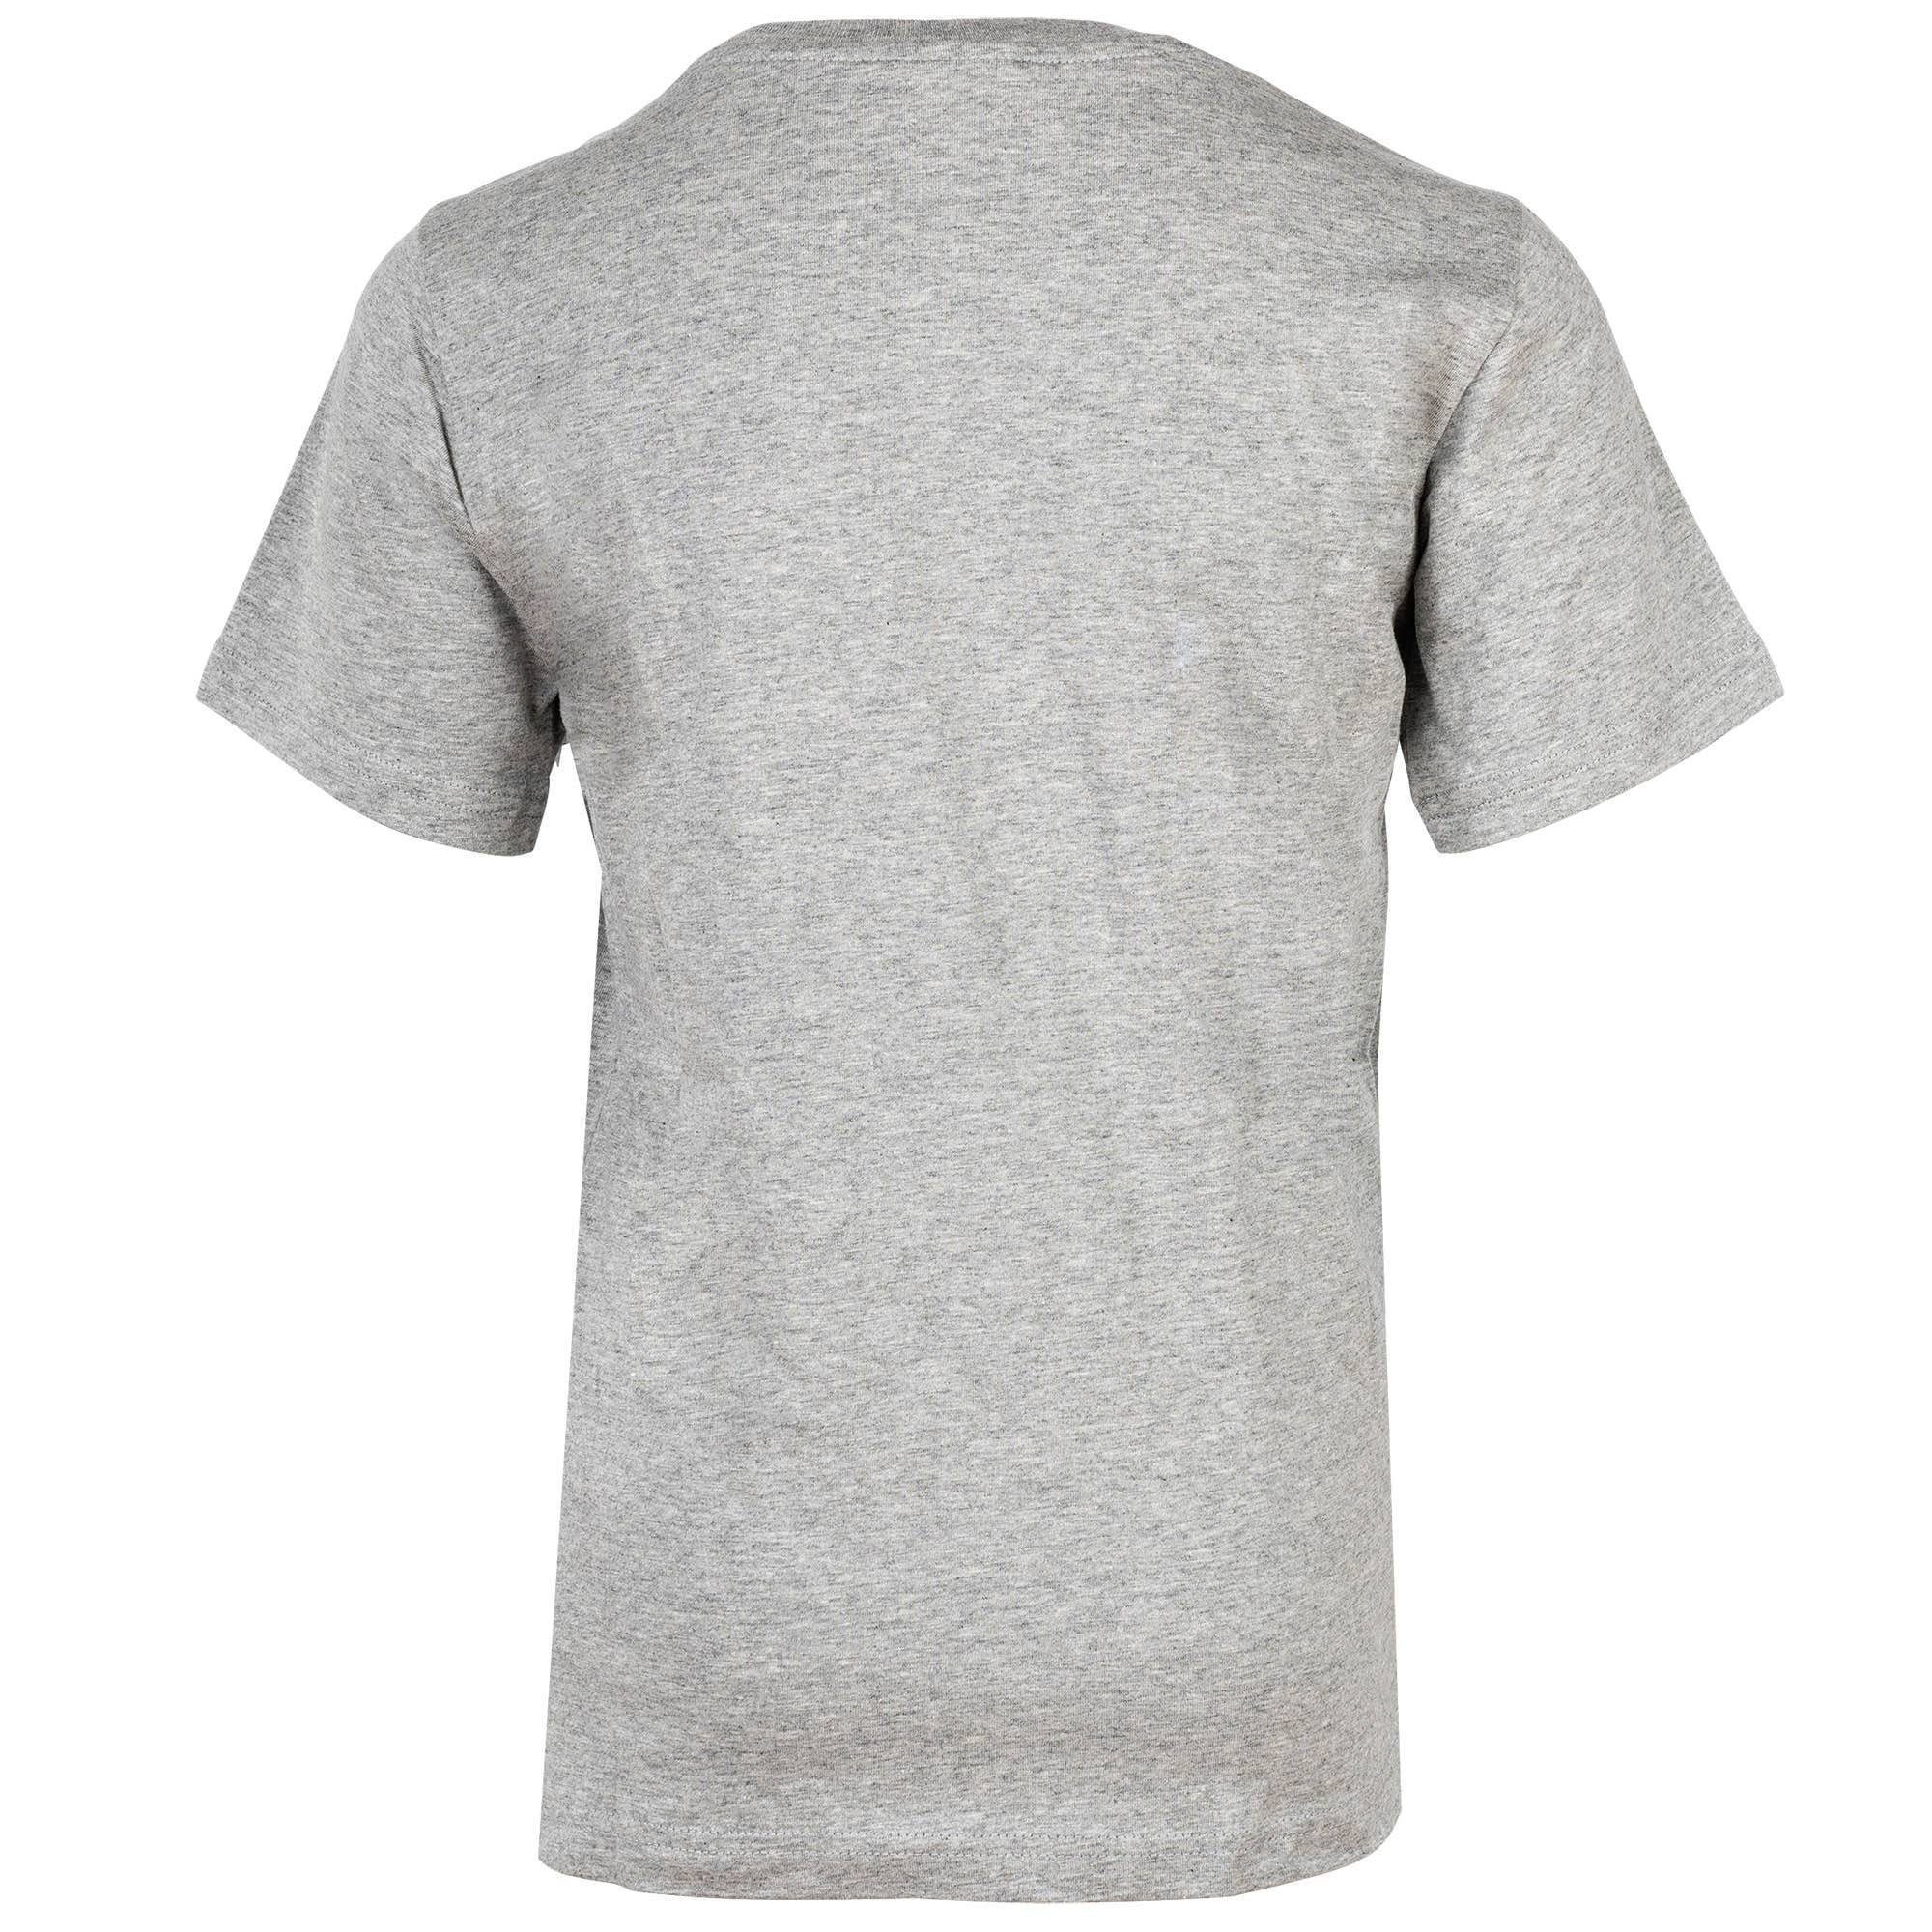 T-Shirt Crewneck, Grau Kinder Unisex Rundhals - T-Shirt Champion